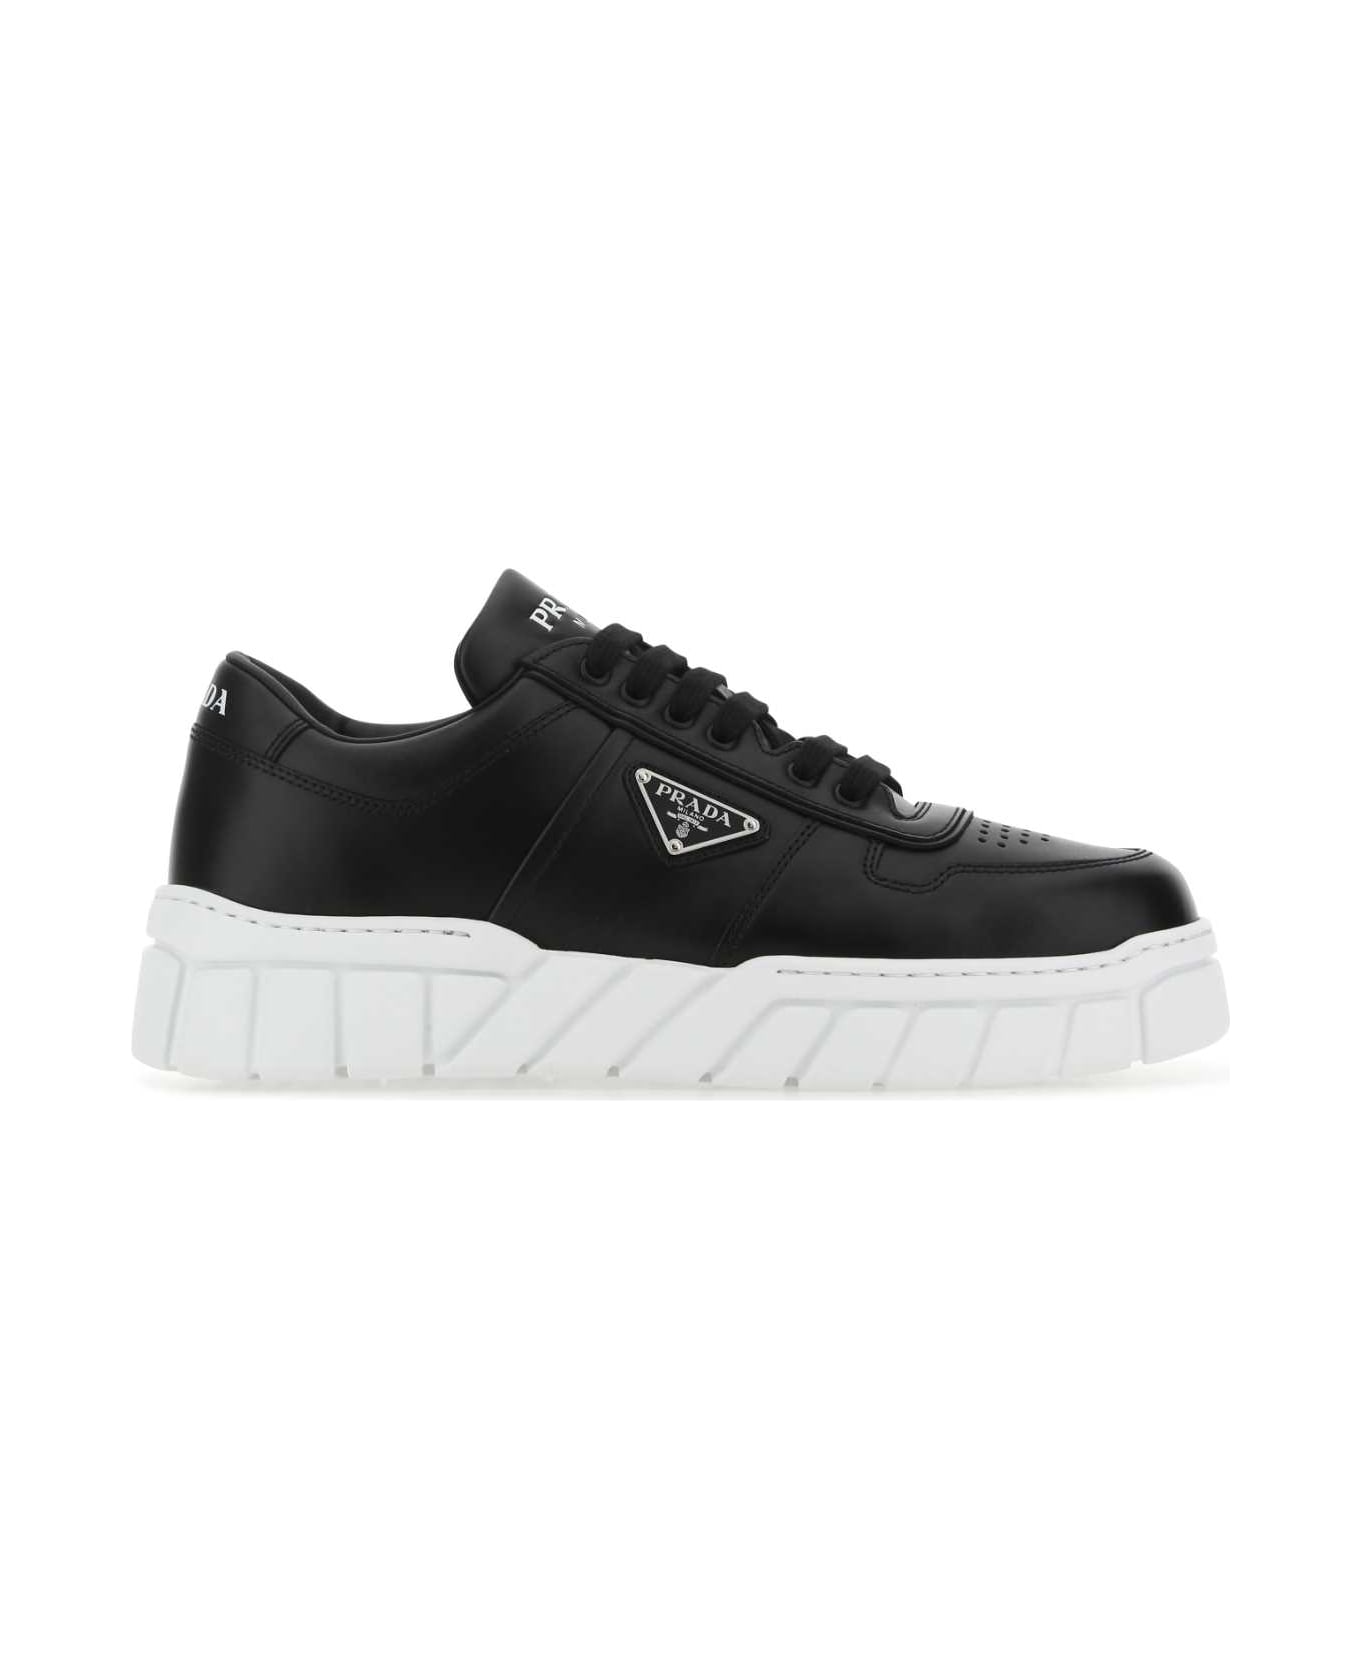 Prada Black Leather Sneakers - F0632